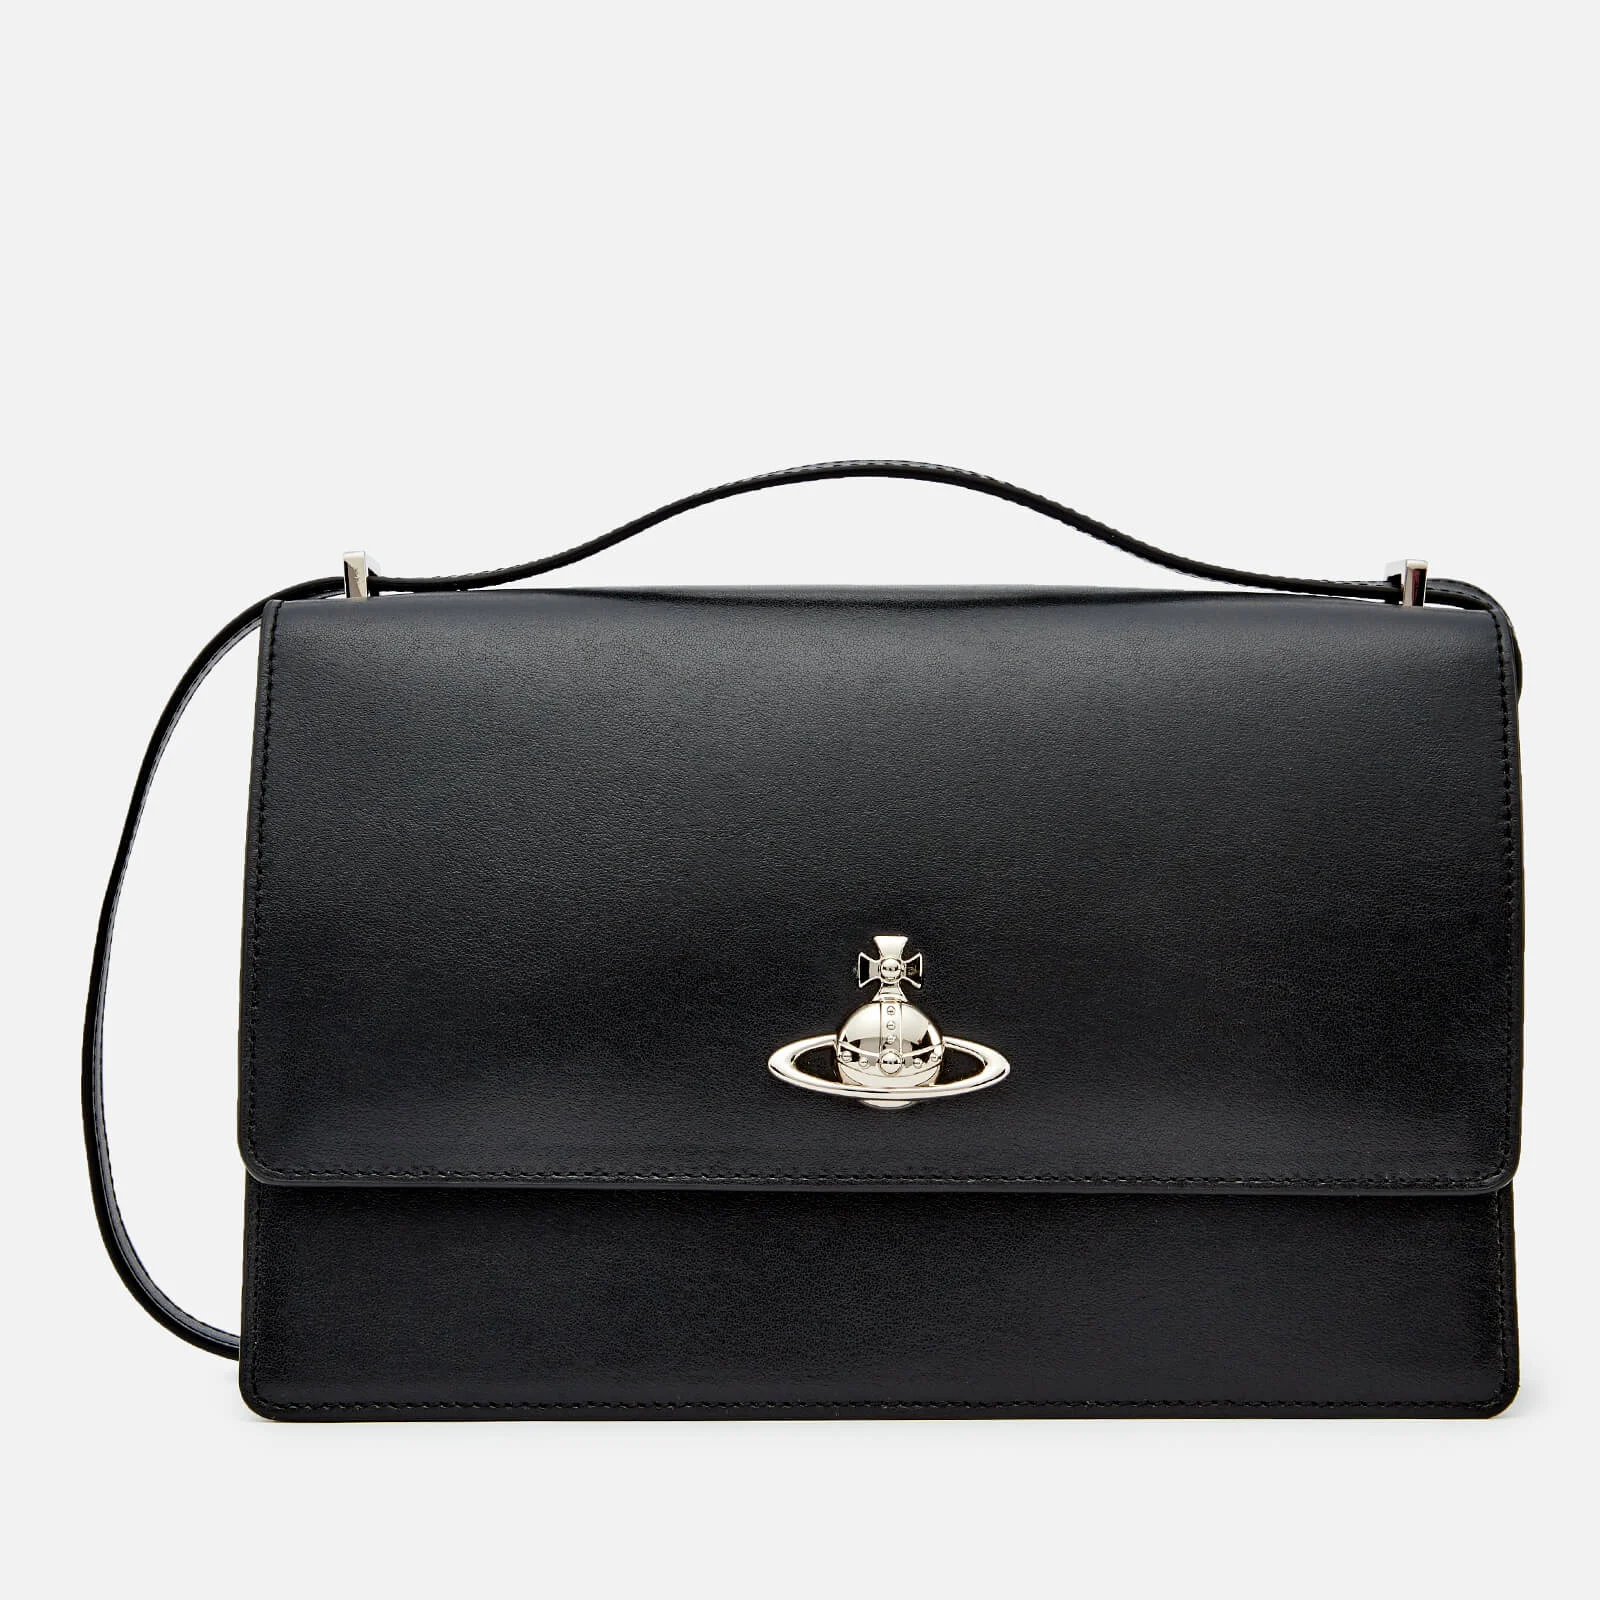 Vivienne Westwood Women's Matilda Large Bag with Flap - Black Image 1